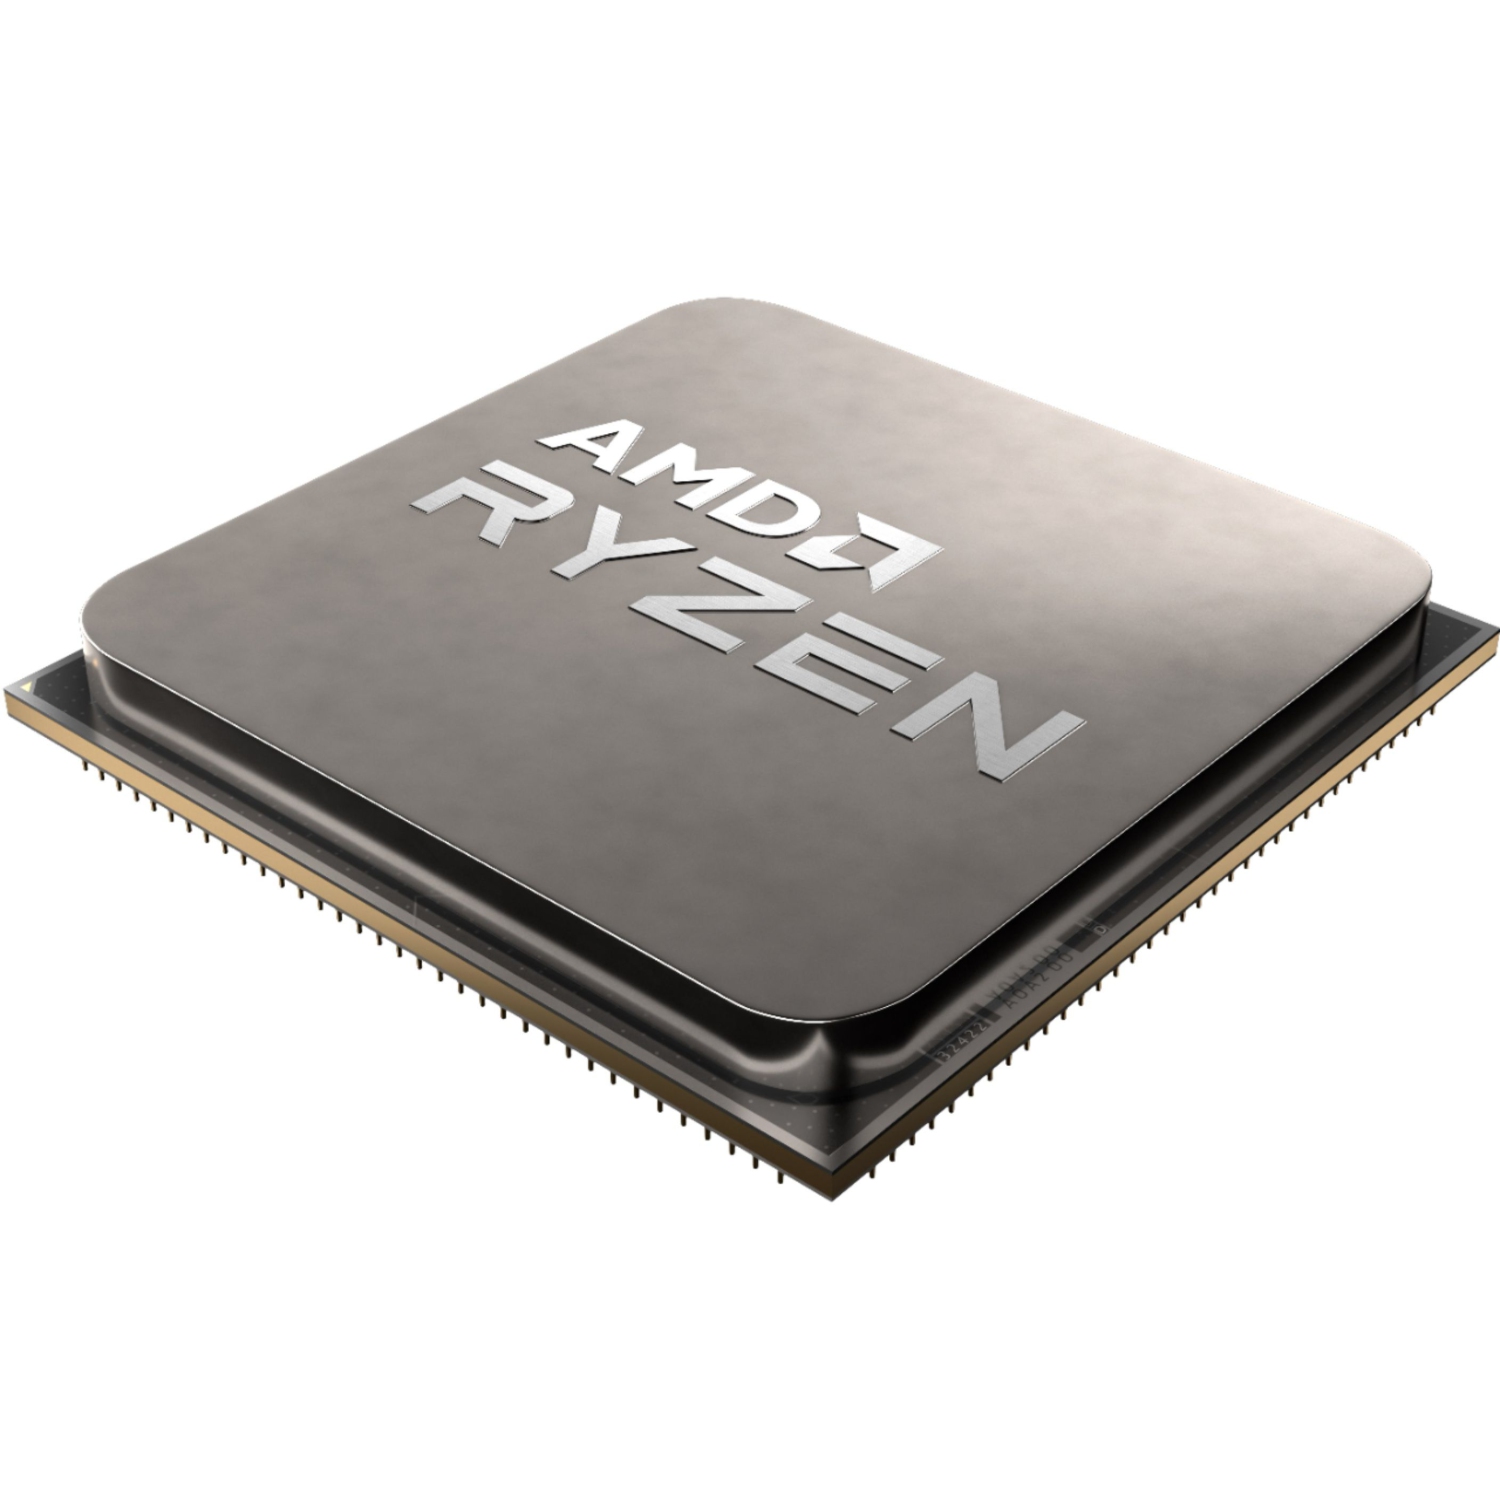 AMD Ryzen 7 5800X 4th Gen 8-core, 16-threads Unlocked Desktop Processor  Without Cooler + Arctic MX-2 Thermal Compound 4g